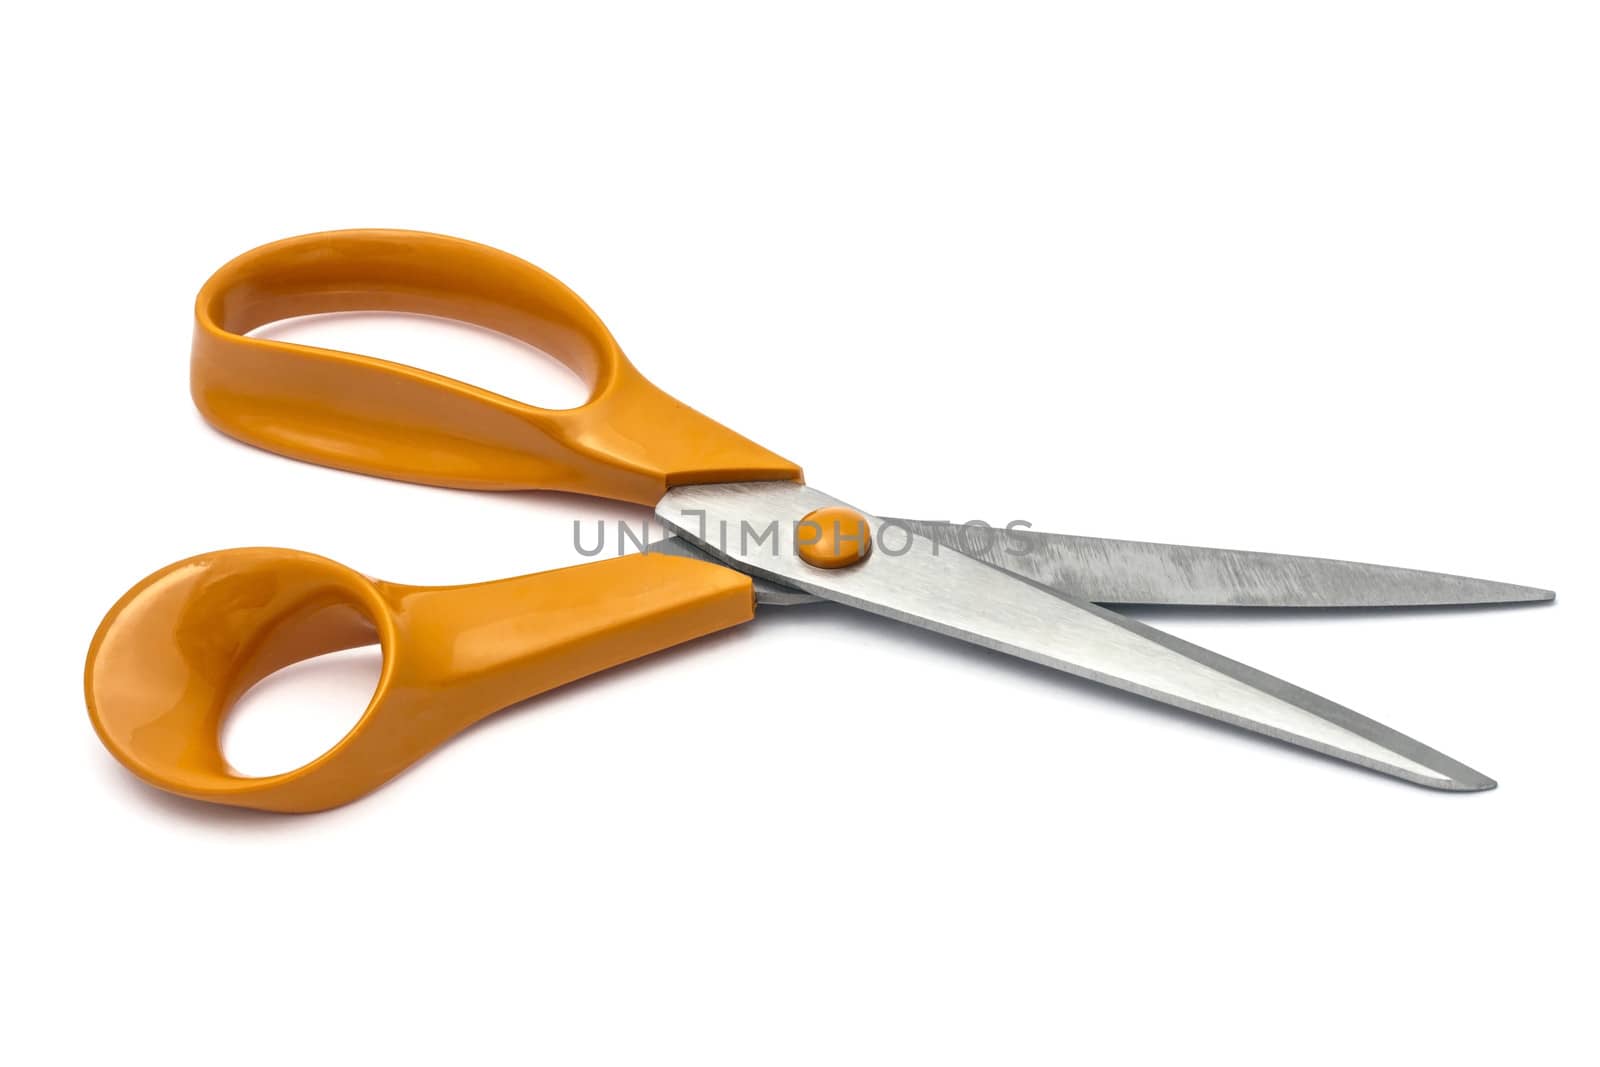  handled scissors isolated on white background 